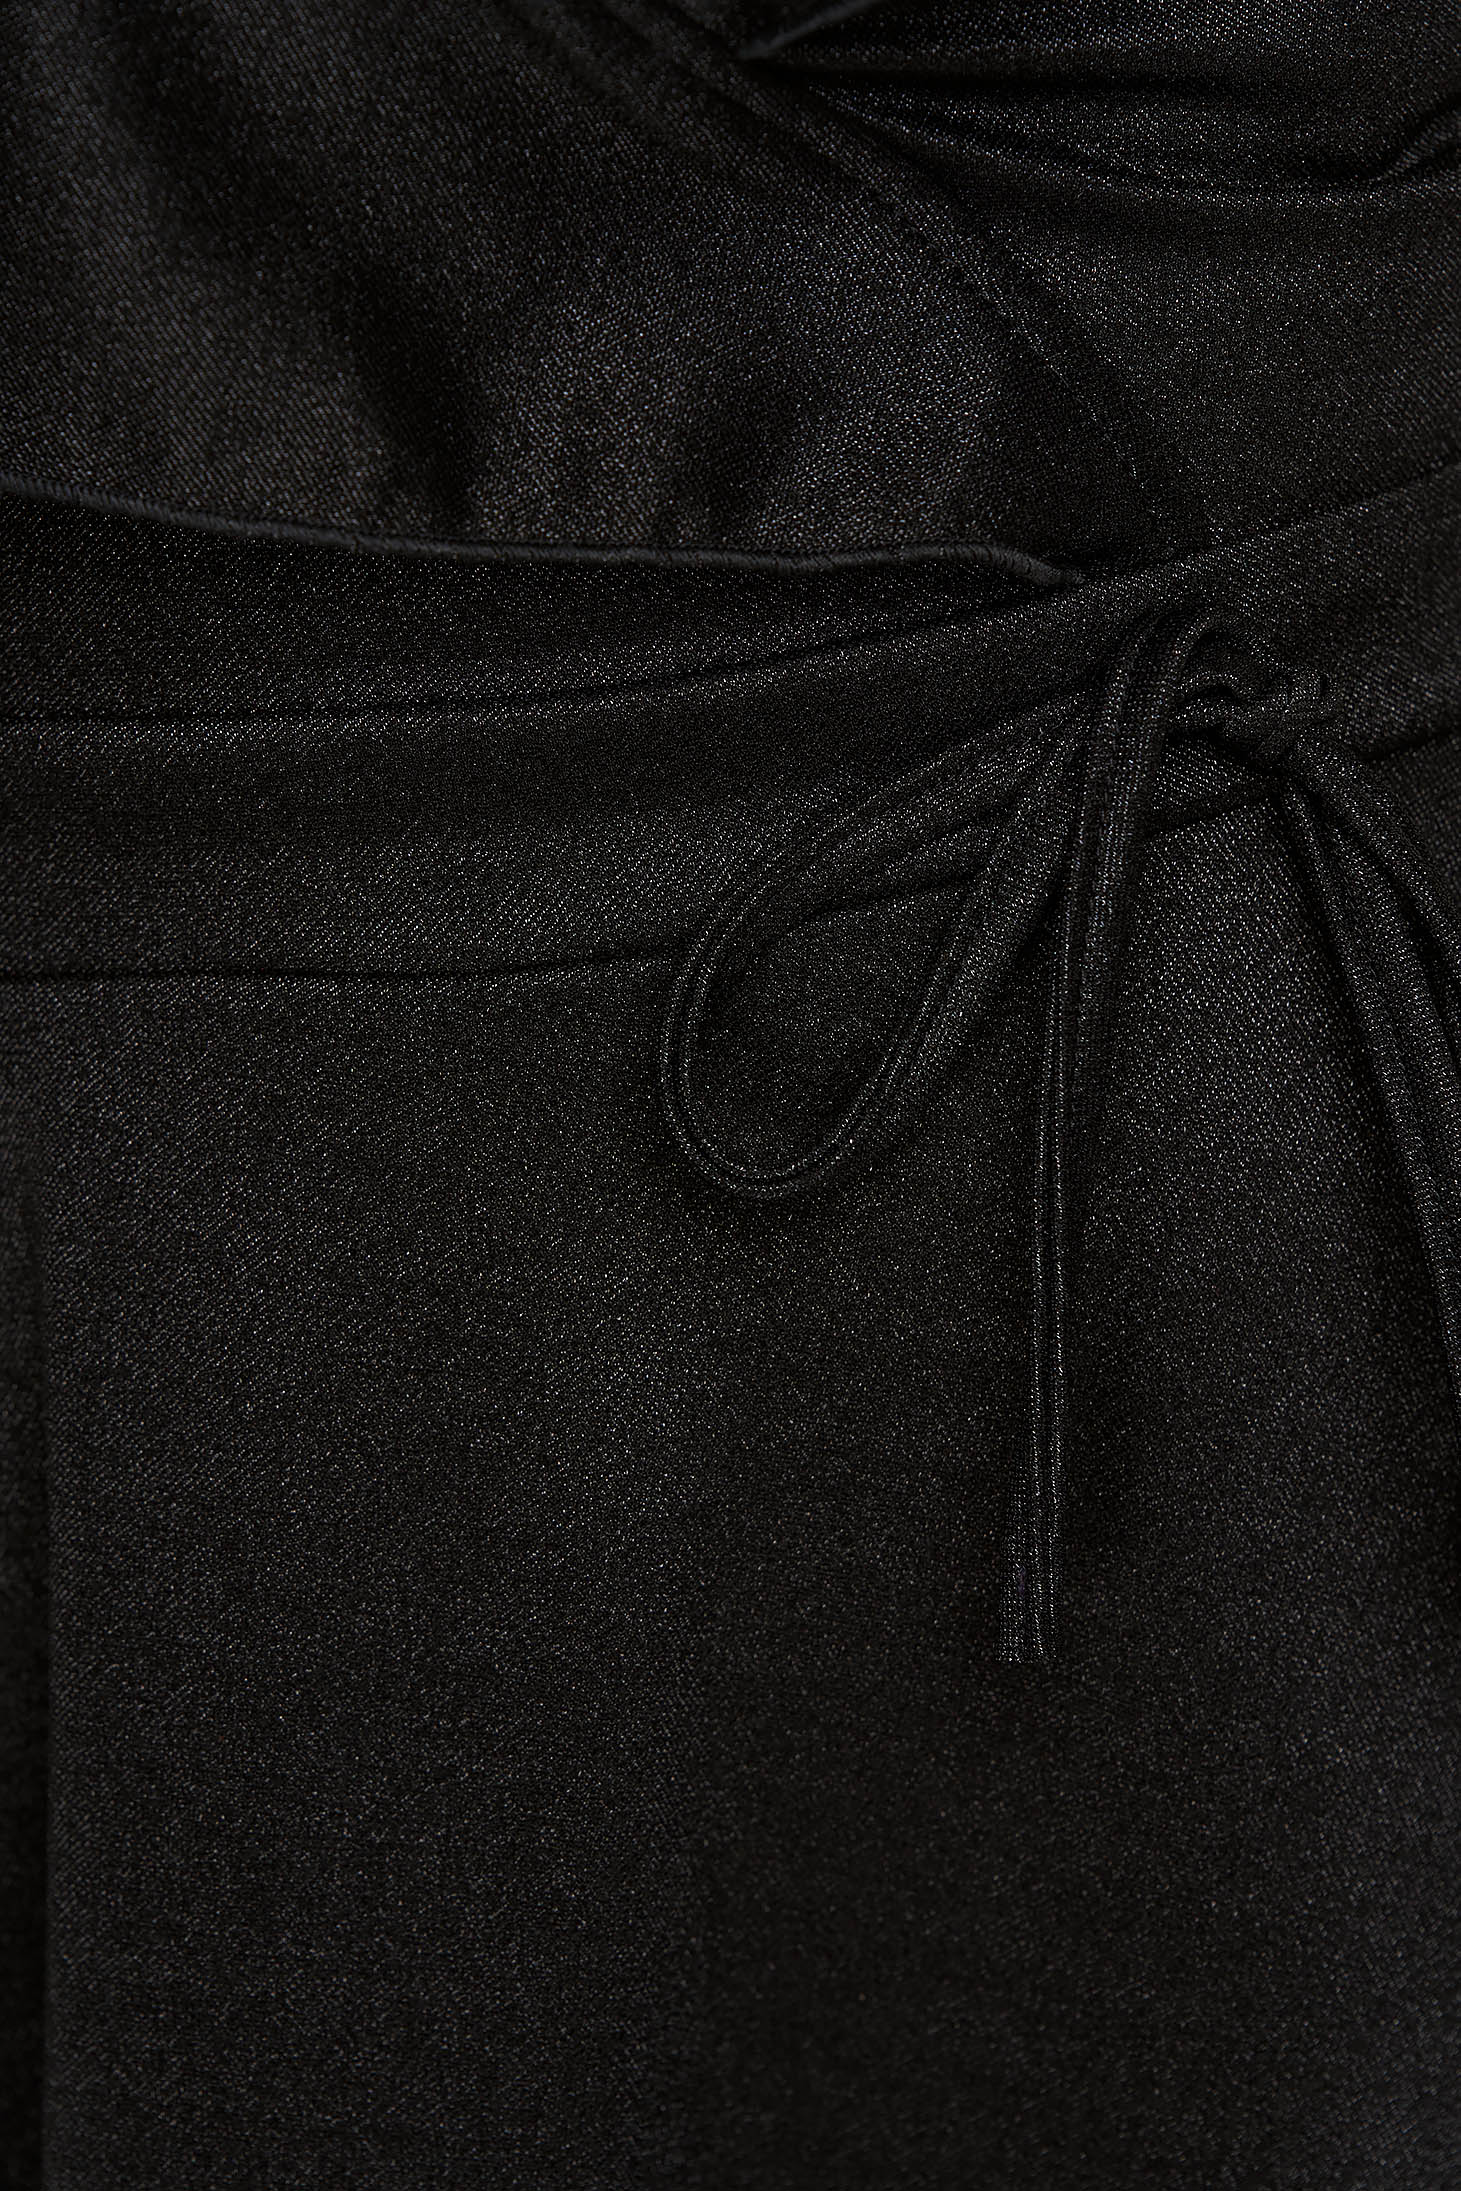 Rochie din crep neagra pana la genunchi in clos cu aplicatii cu sclipici - StarShinerS 6 - StarShinerS.ro